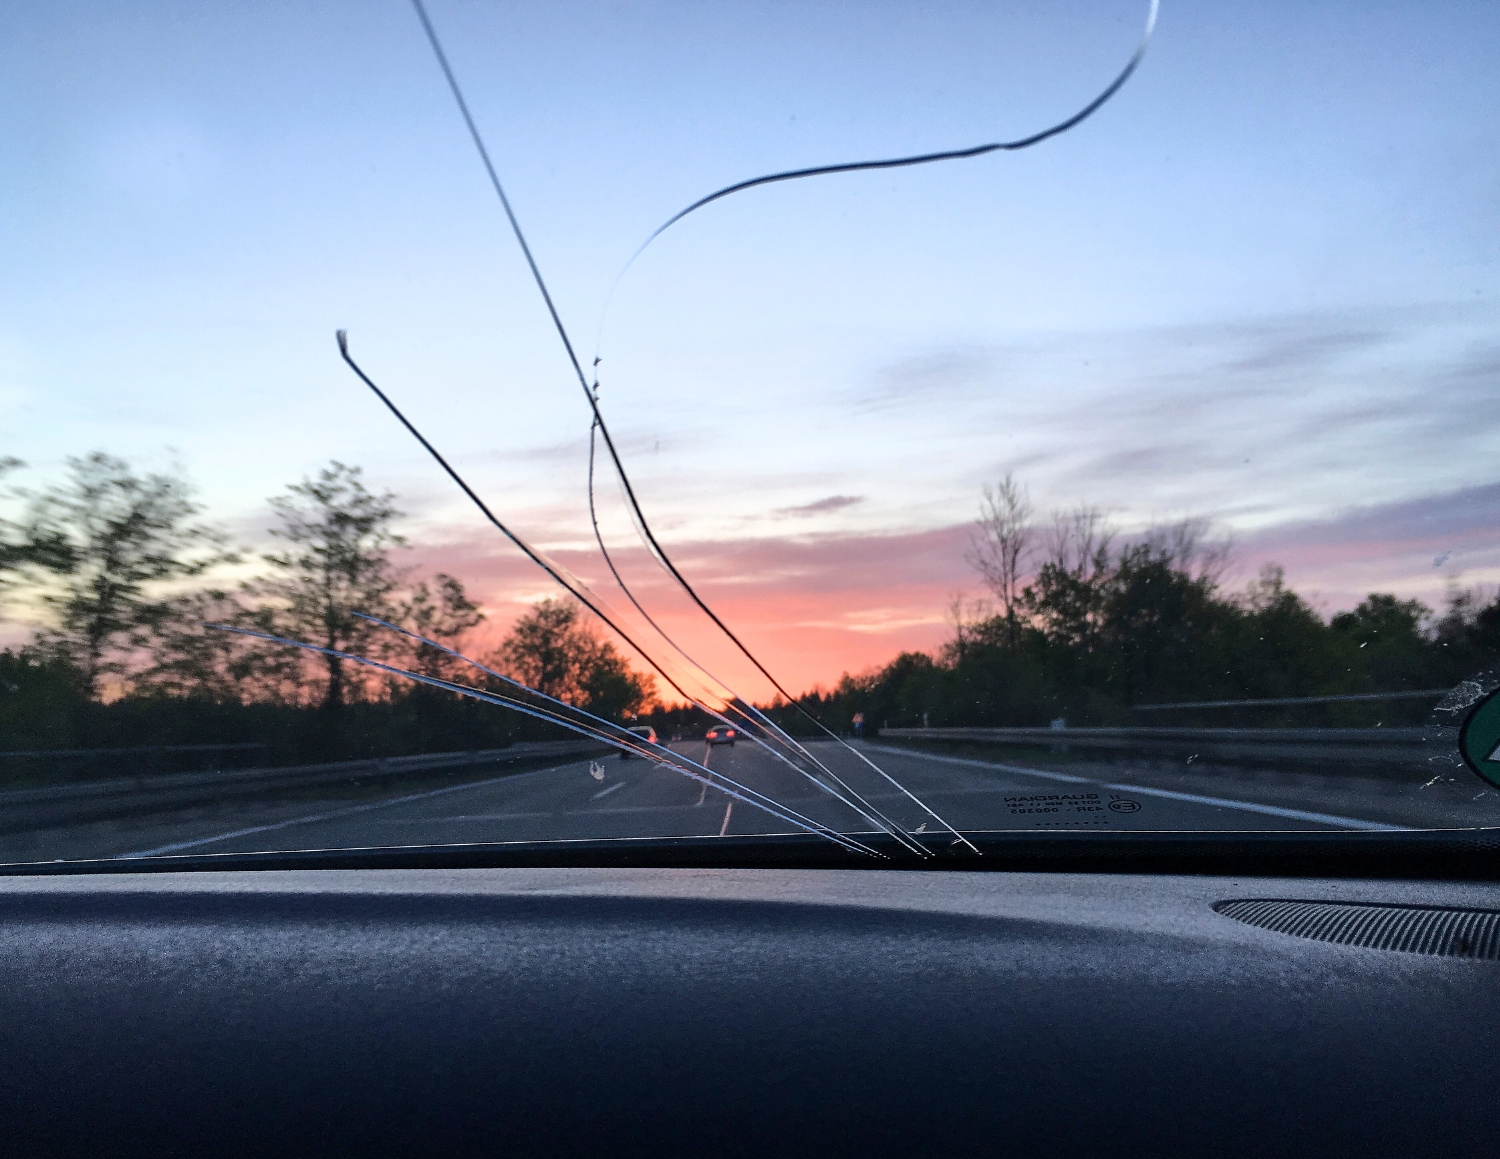 windshield-crack